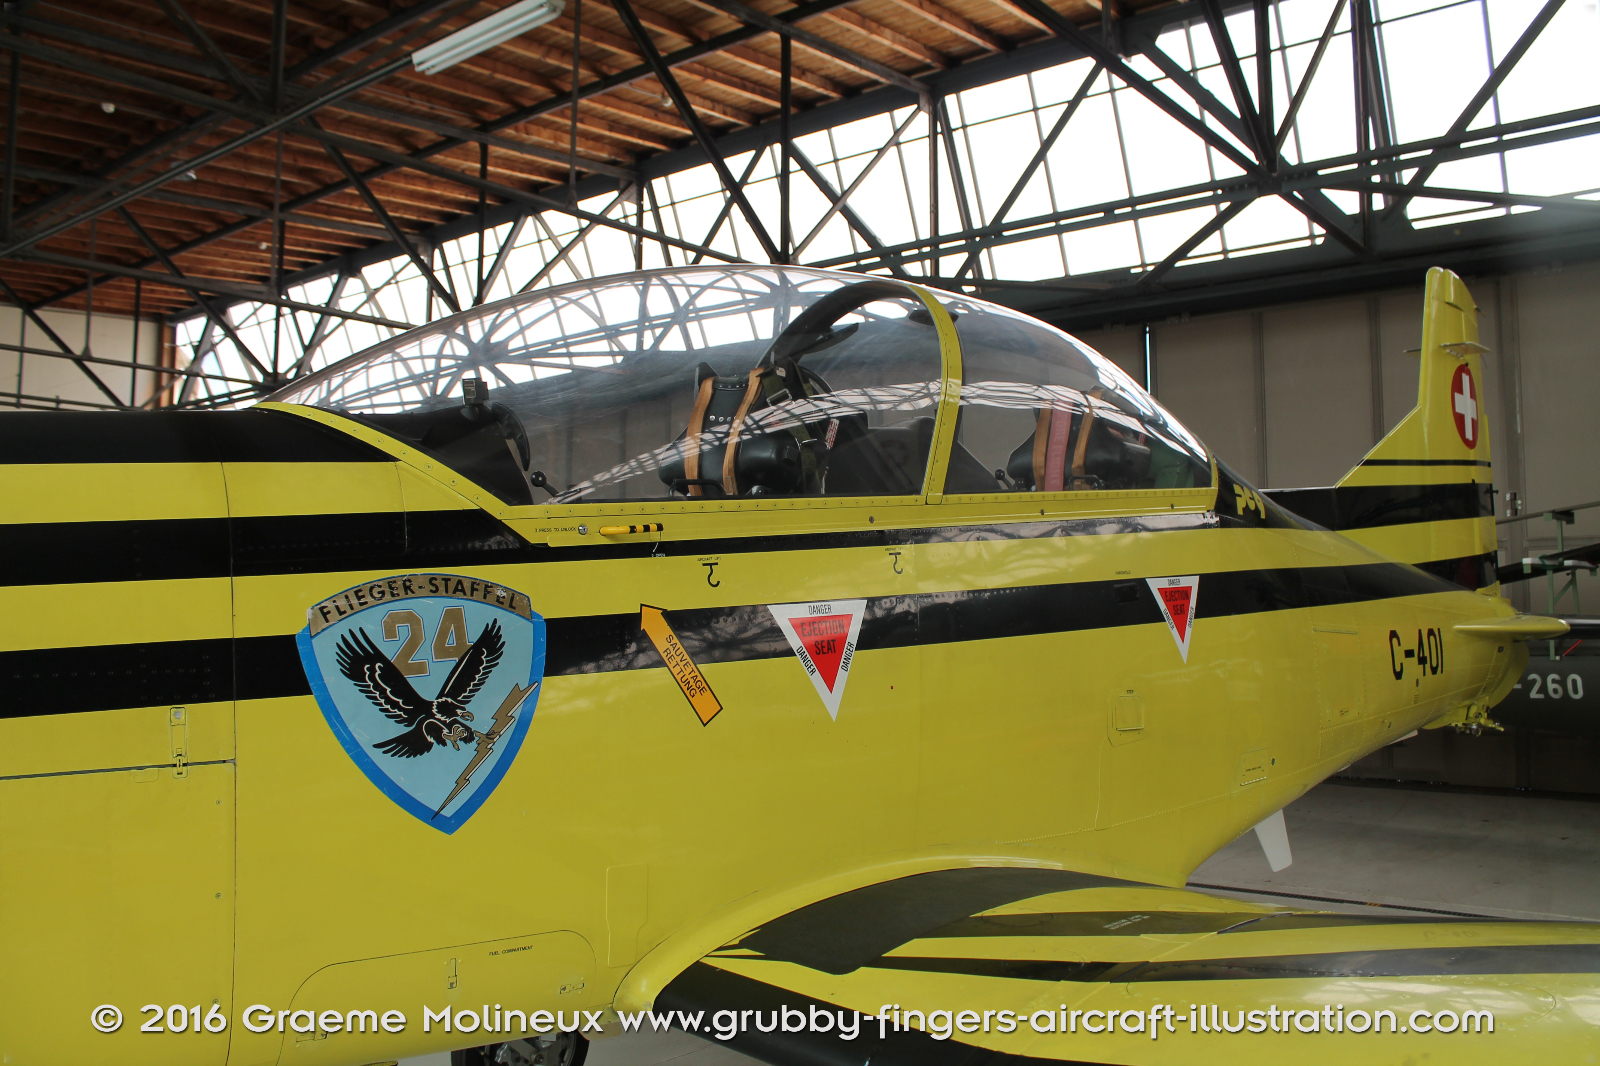 PILATUS_PC-9_C-401_Swiss_Air_Force_Museum_2015_06_GrubbyFingers